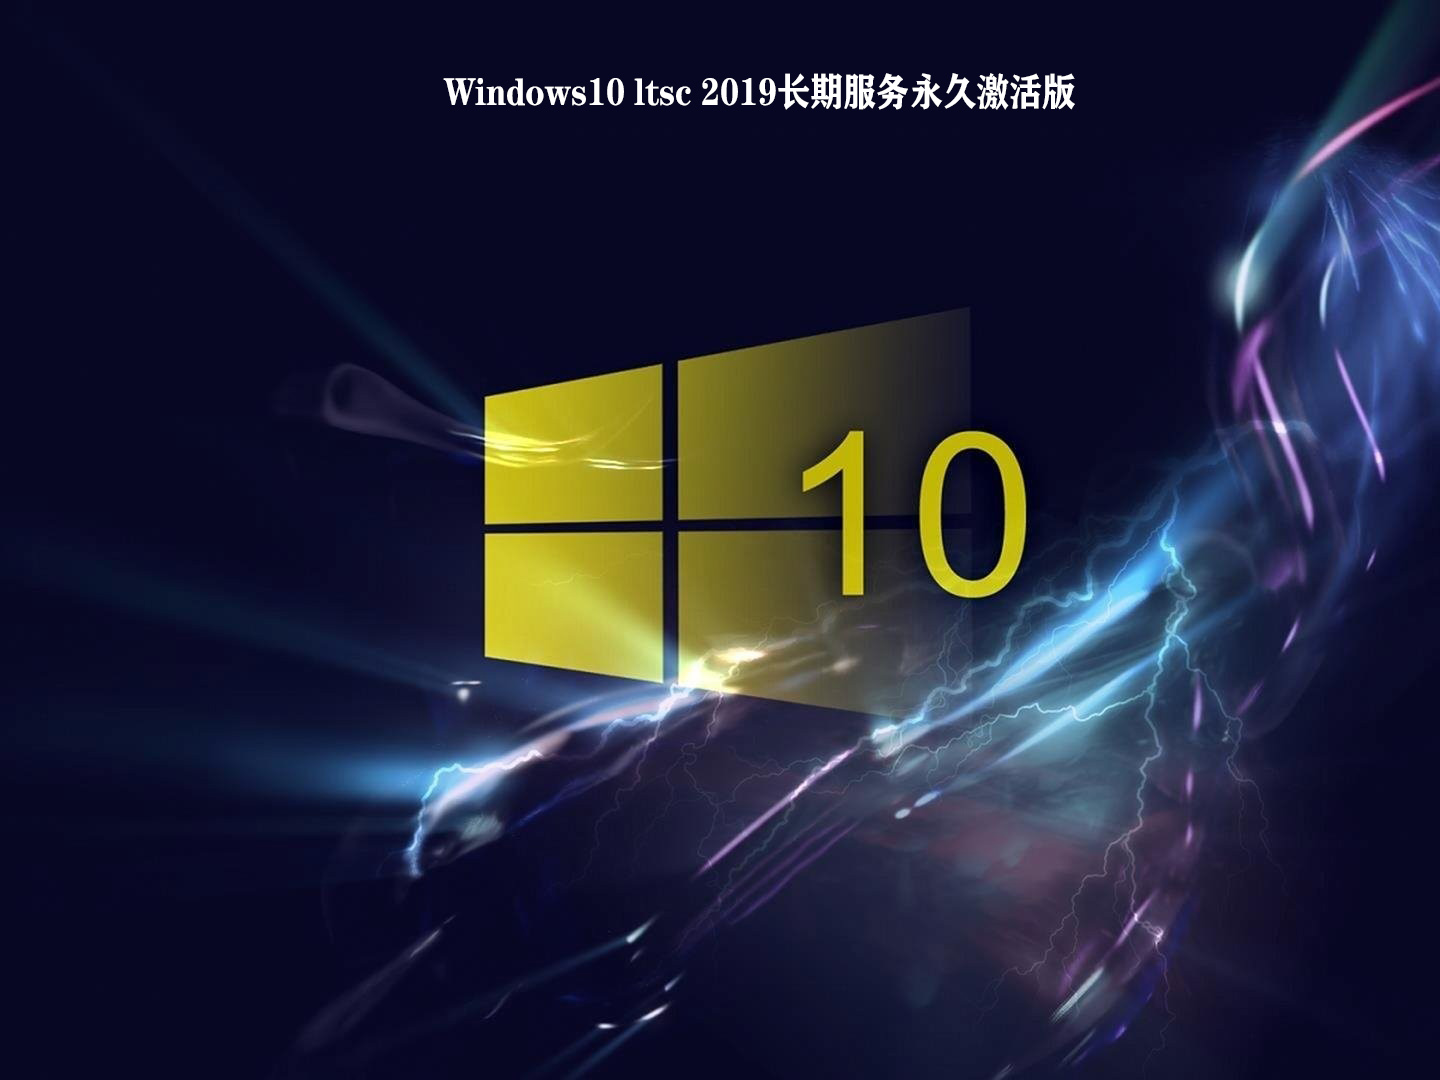 Windows10 ltsc 2019长期服务永久激活版